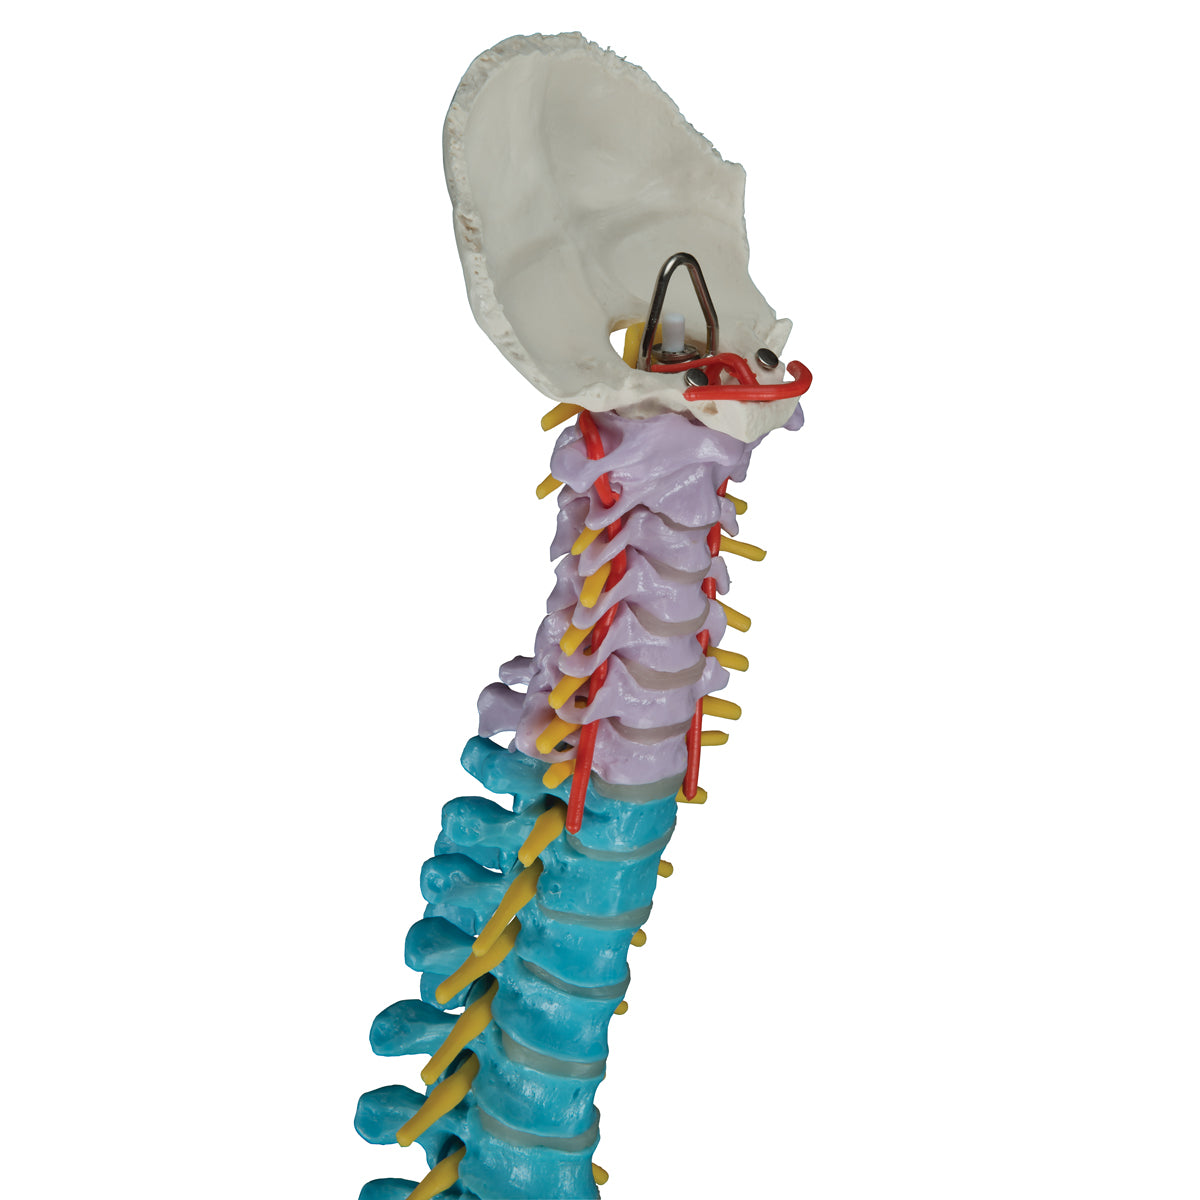 A58/8 Didactic Flexible Human Spine Model - 3B Smart Anatomy